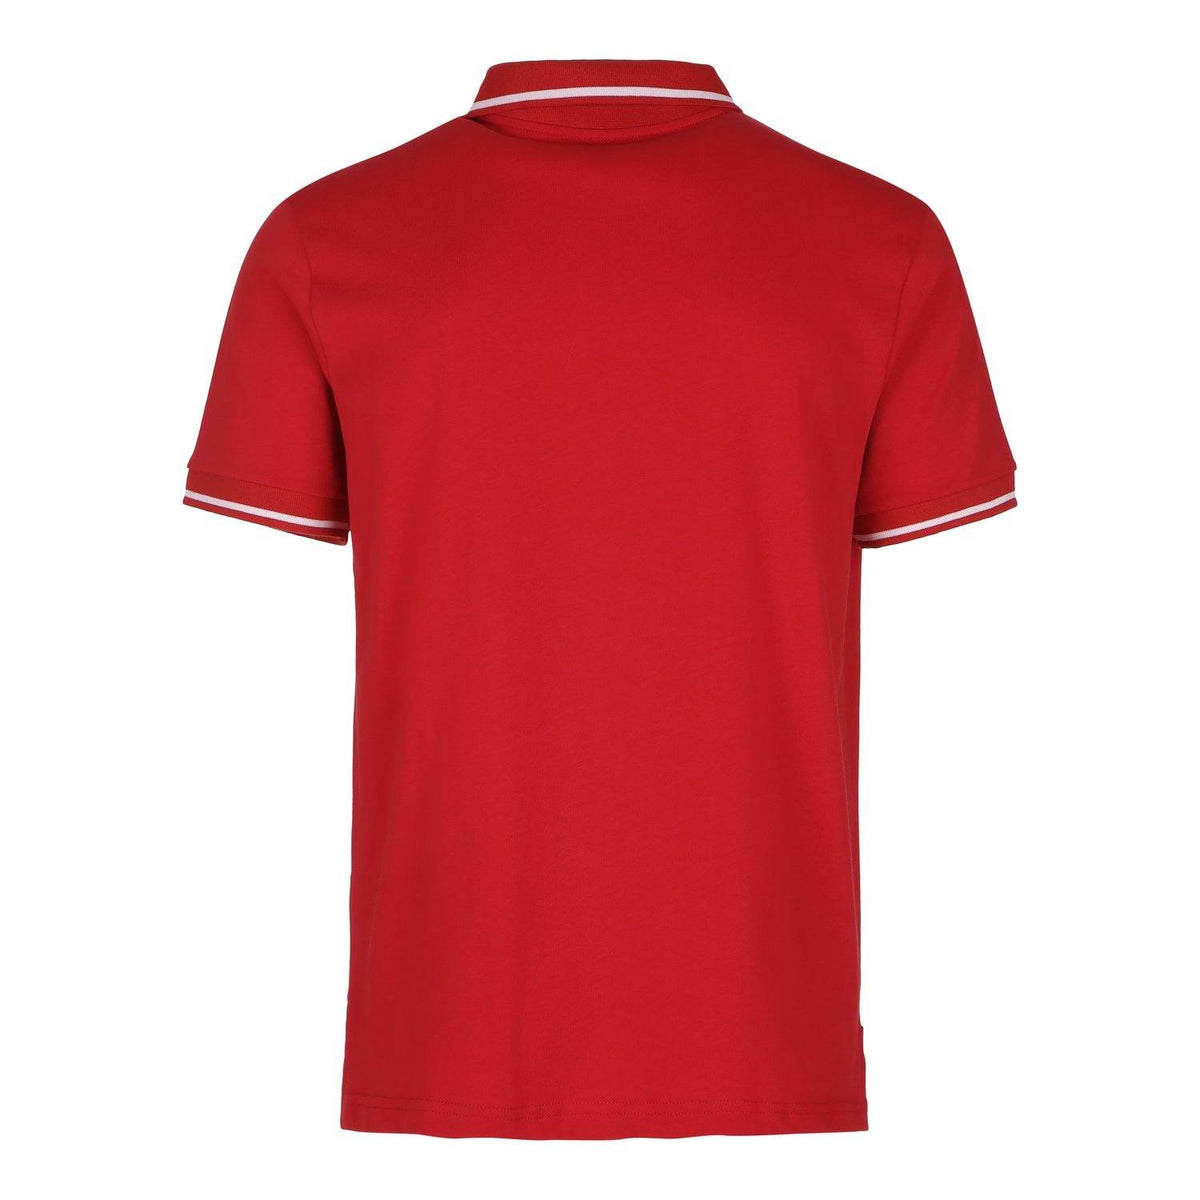 Hurlingham – Red Polo shirt – Poloshirts – Sumisura